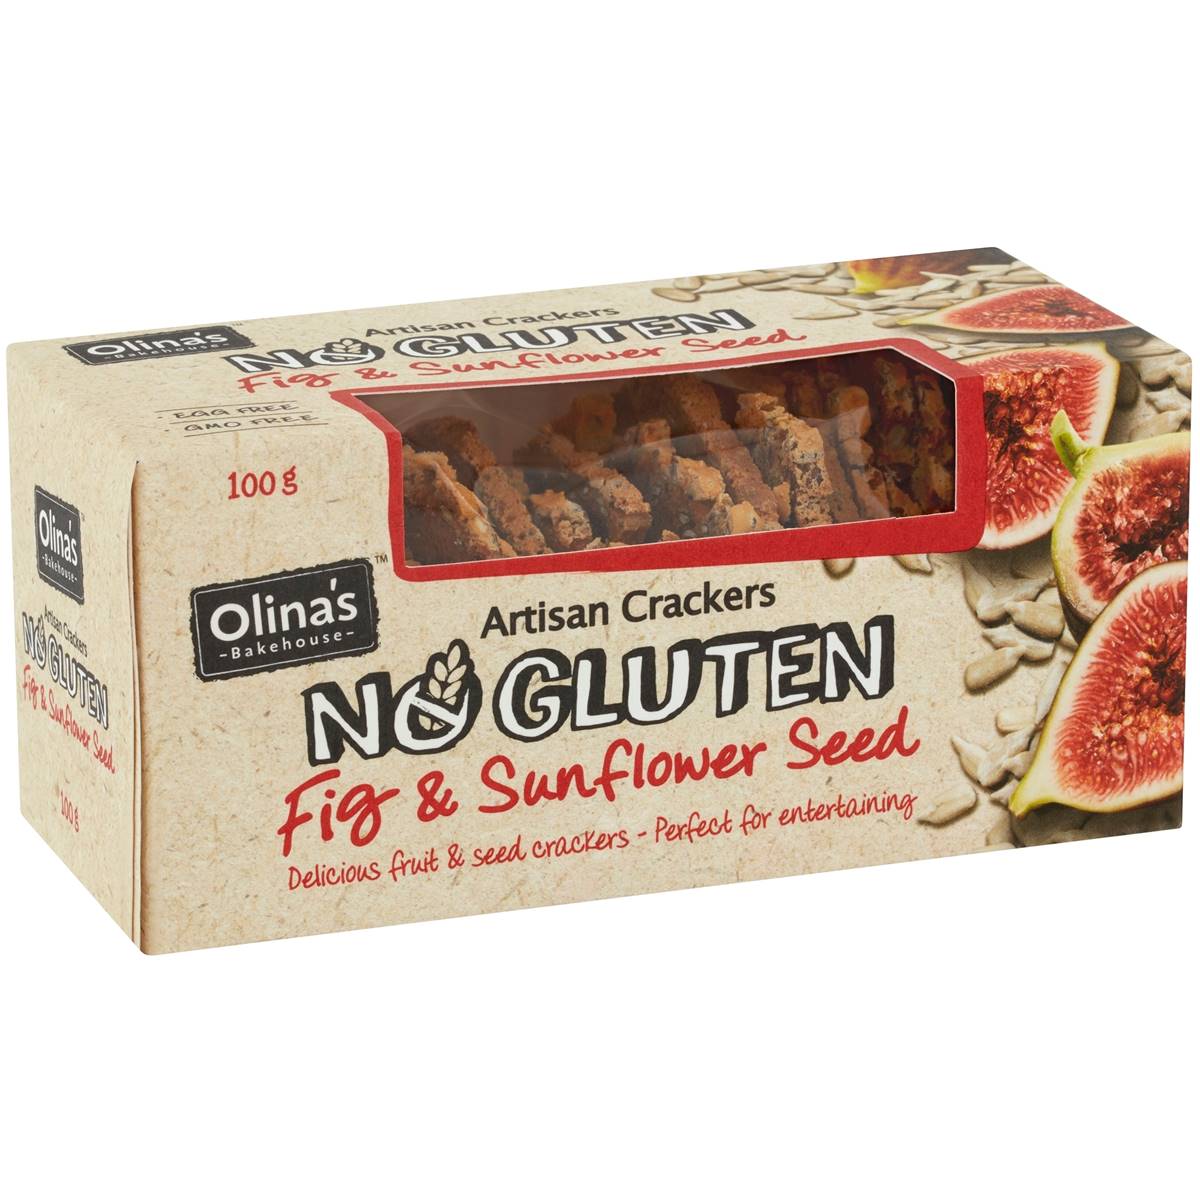 Olinas Artisan Cracker Fig & Sunflower Seed Gluten Free 100g